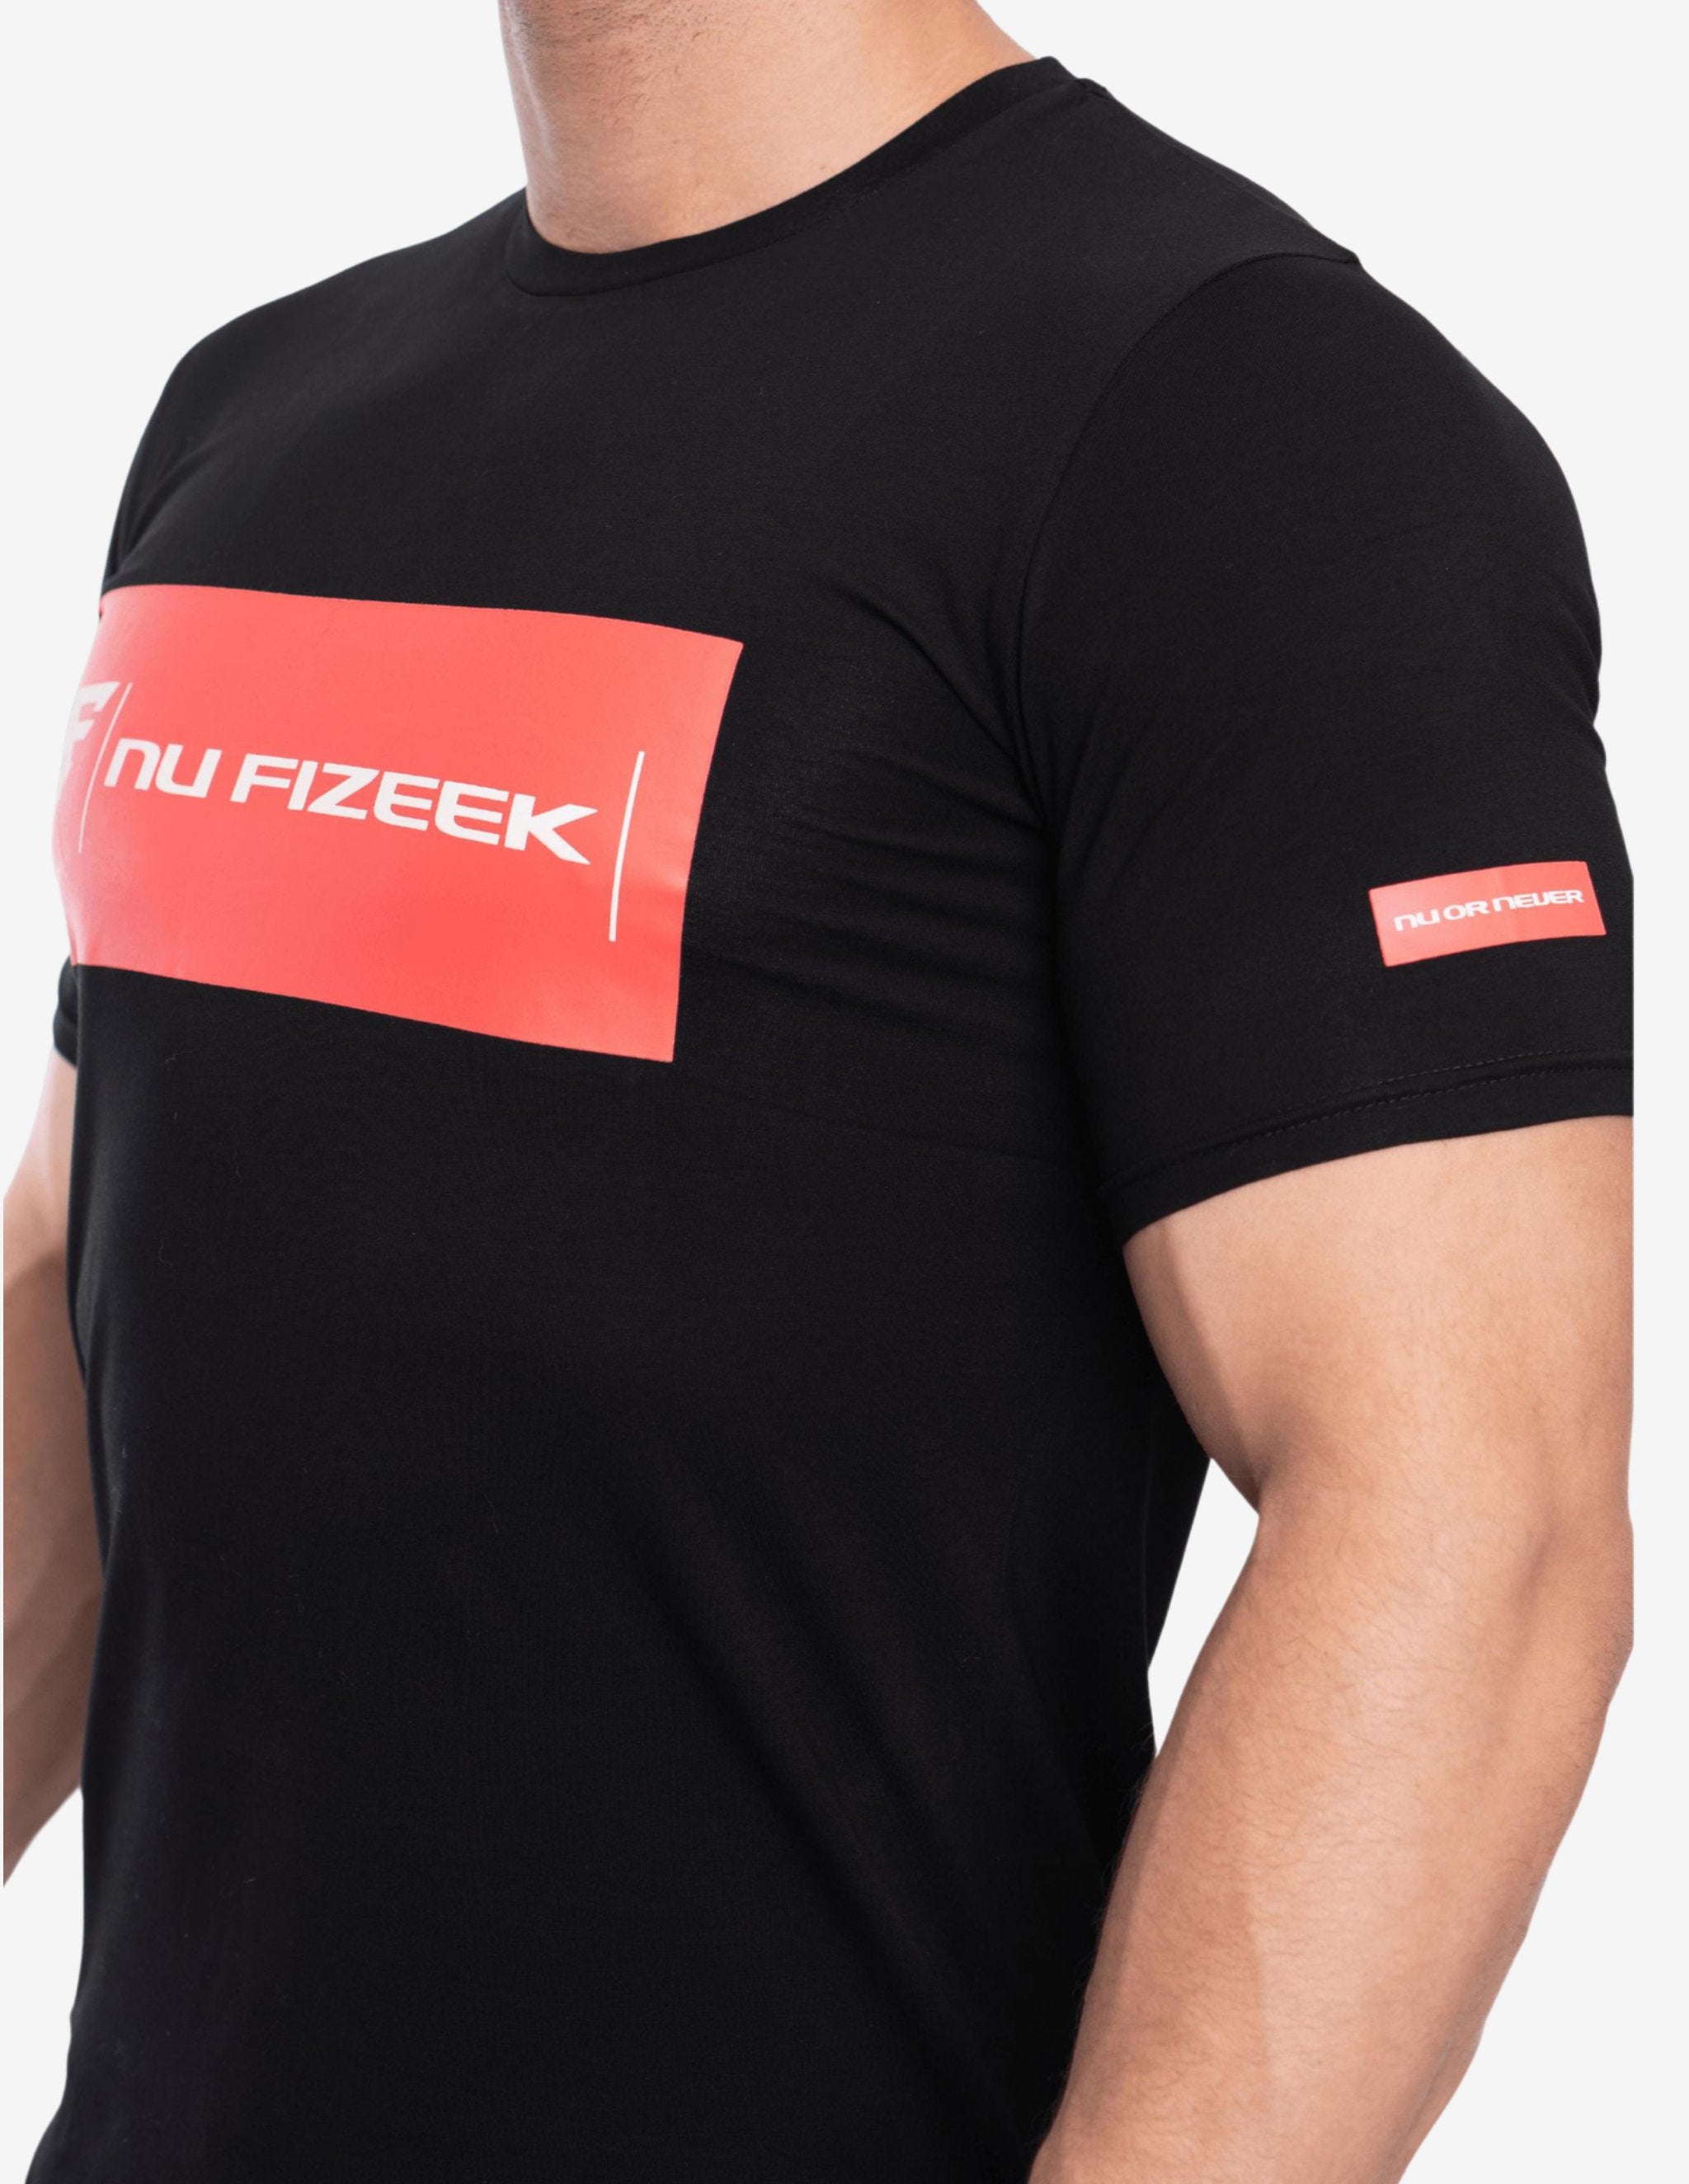 NU FORCE TEE-T-shirt Man-NU FIZEEK-Guru Muscle